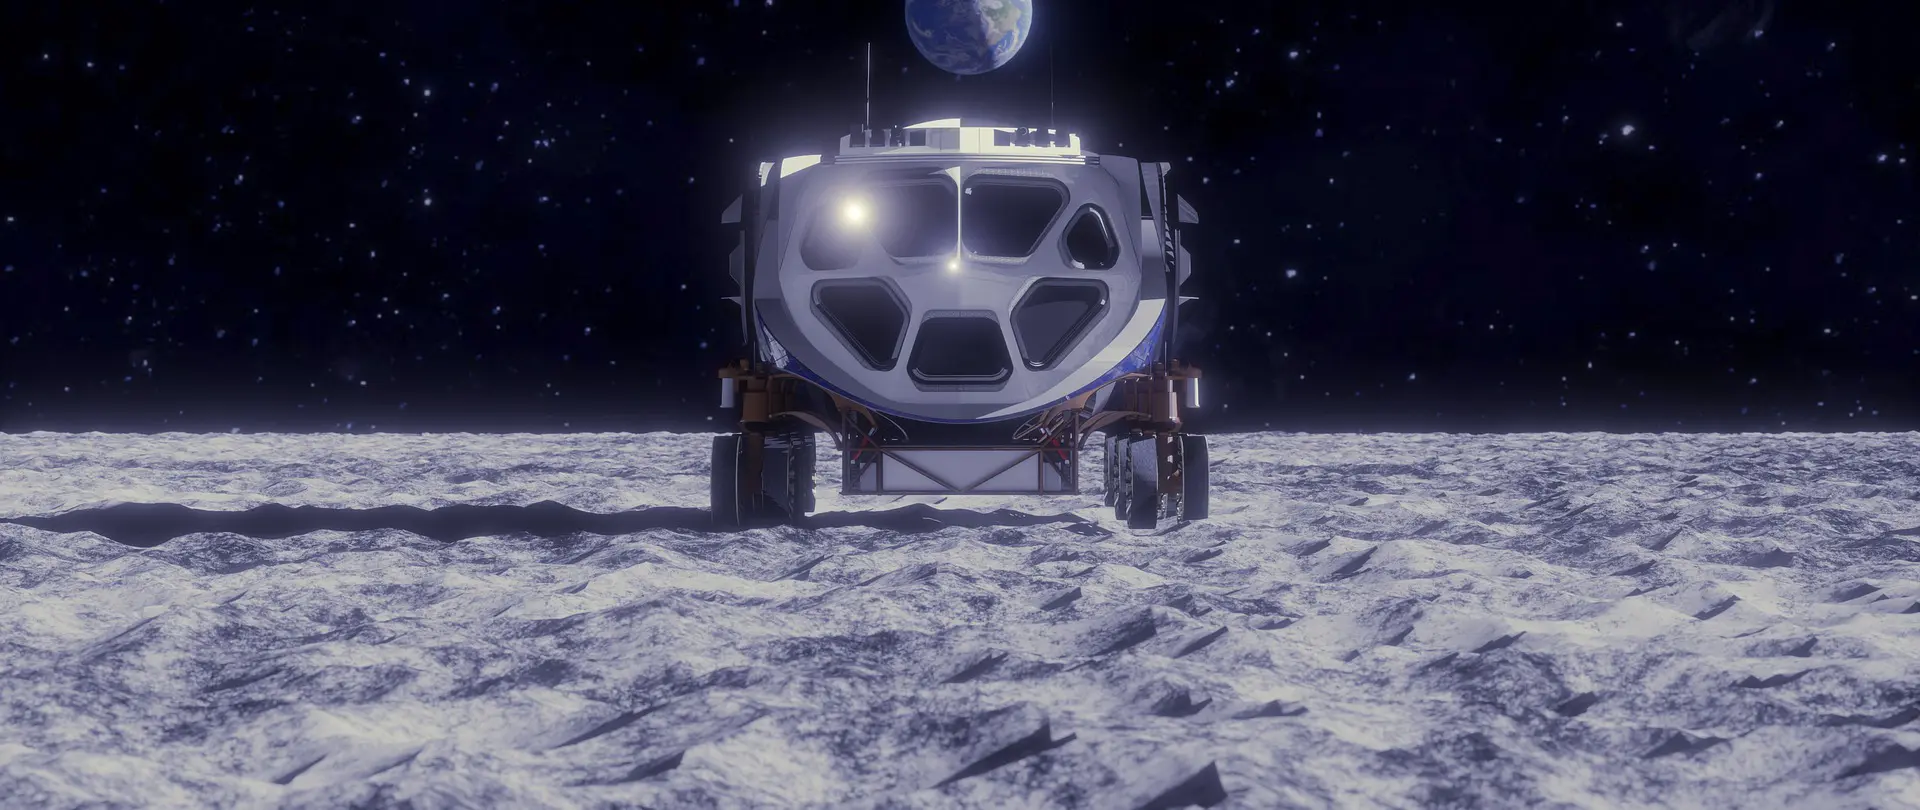 LunarCrush Launches Cosmic Bitcoin Treasure Hunt on the Moon